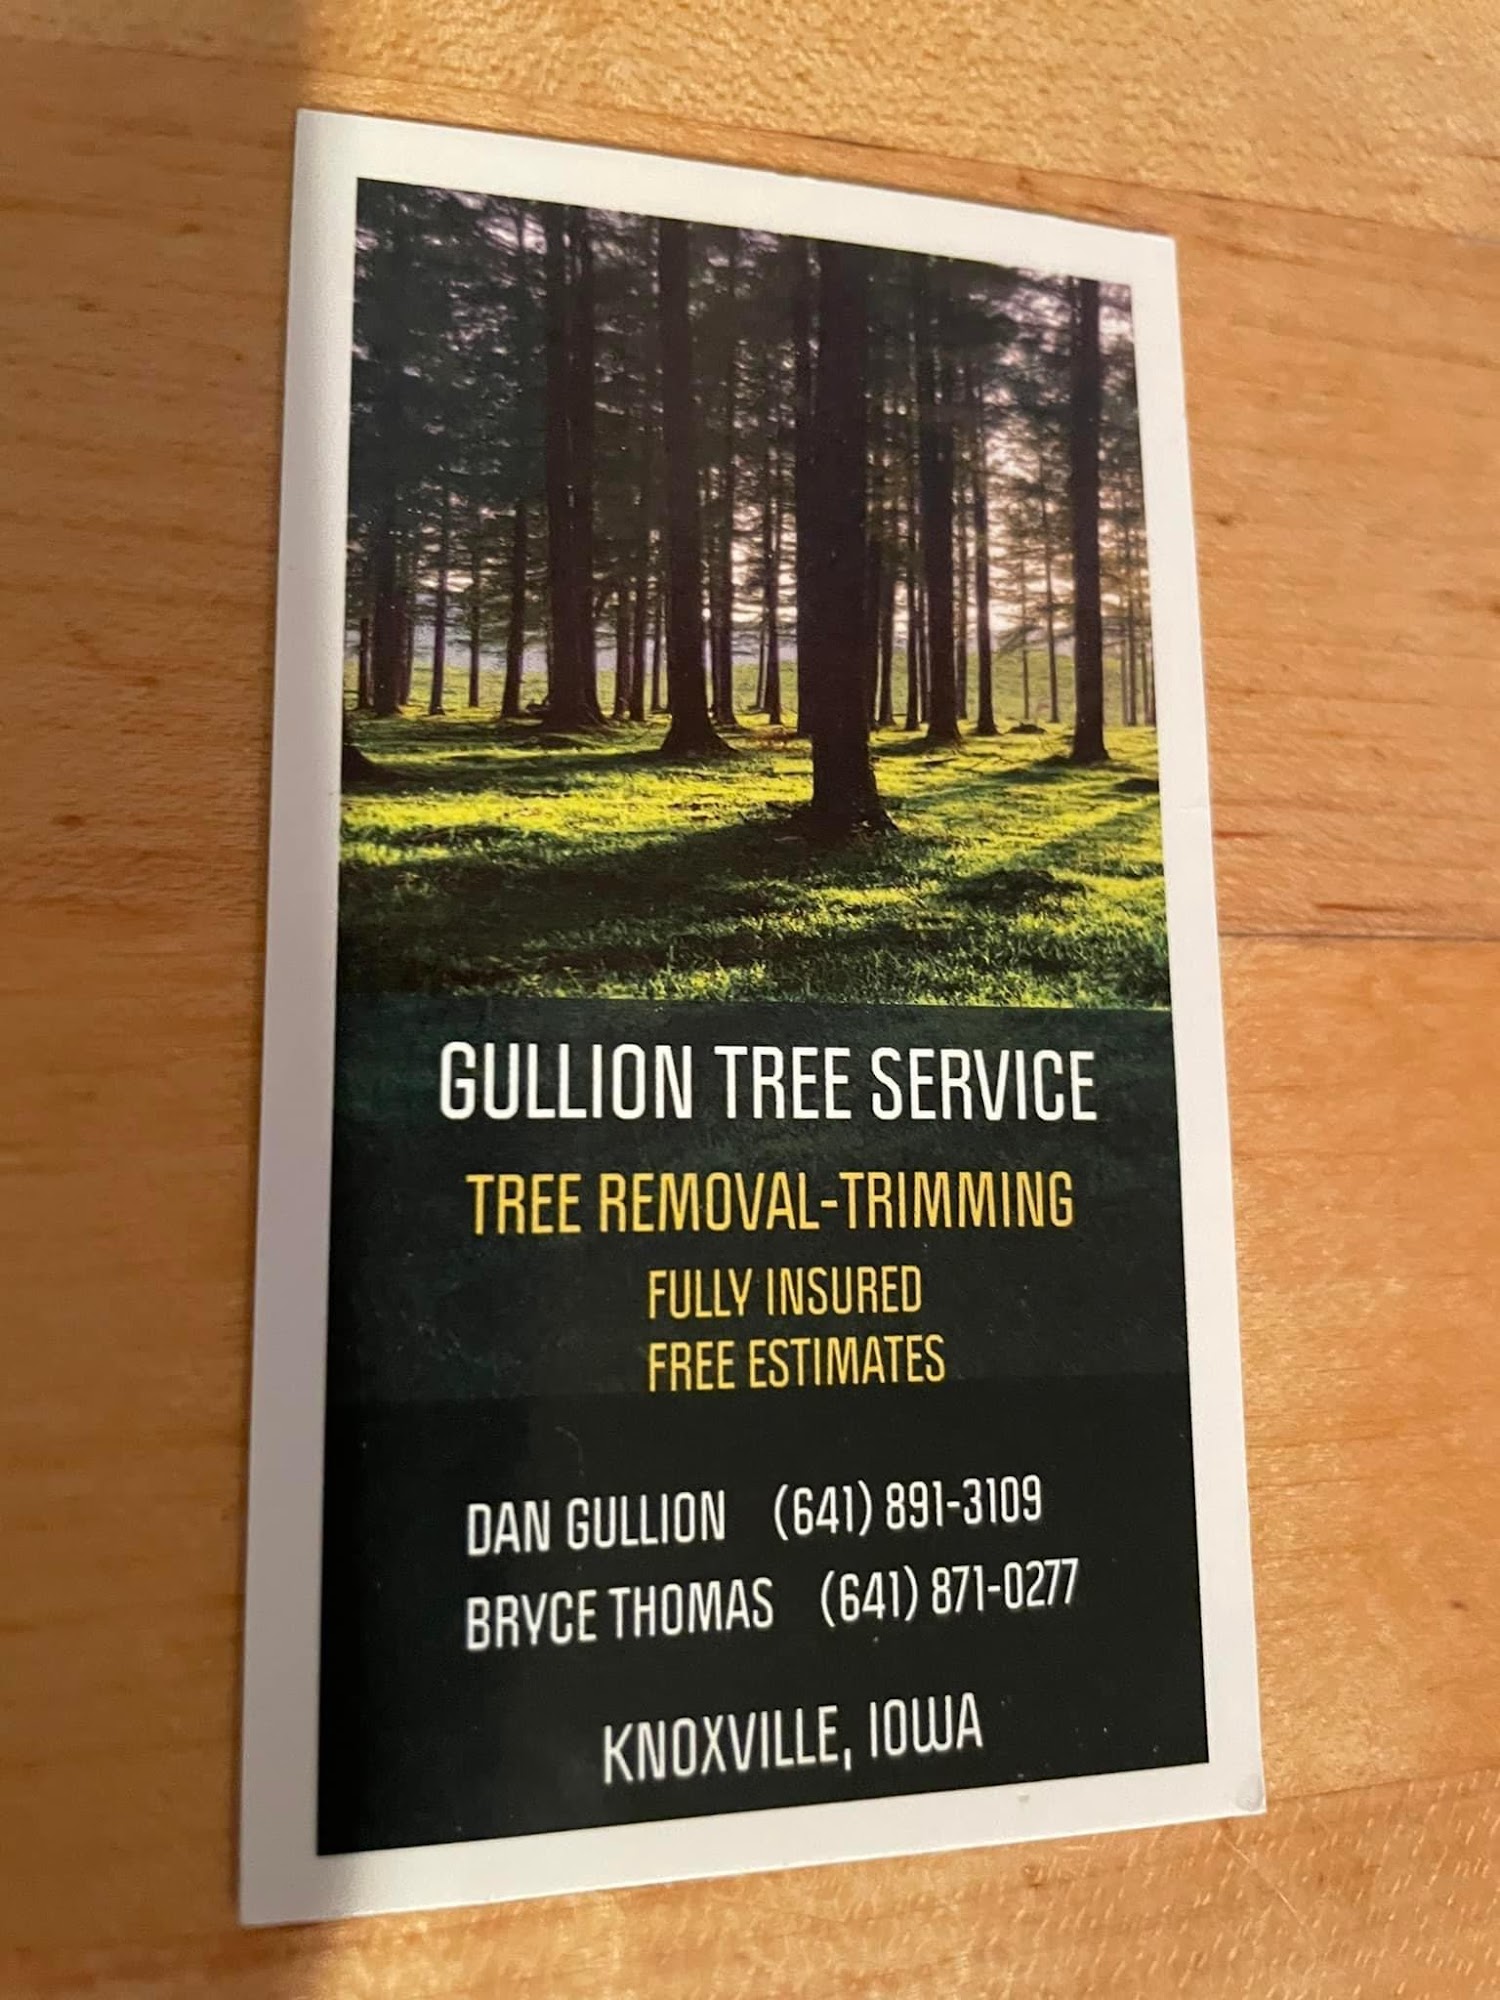 Gullion Tree Service 1506 165th Ave, Knoxville Iowa 50138